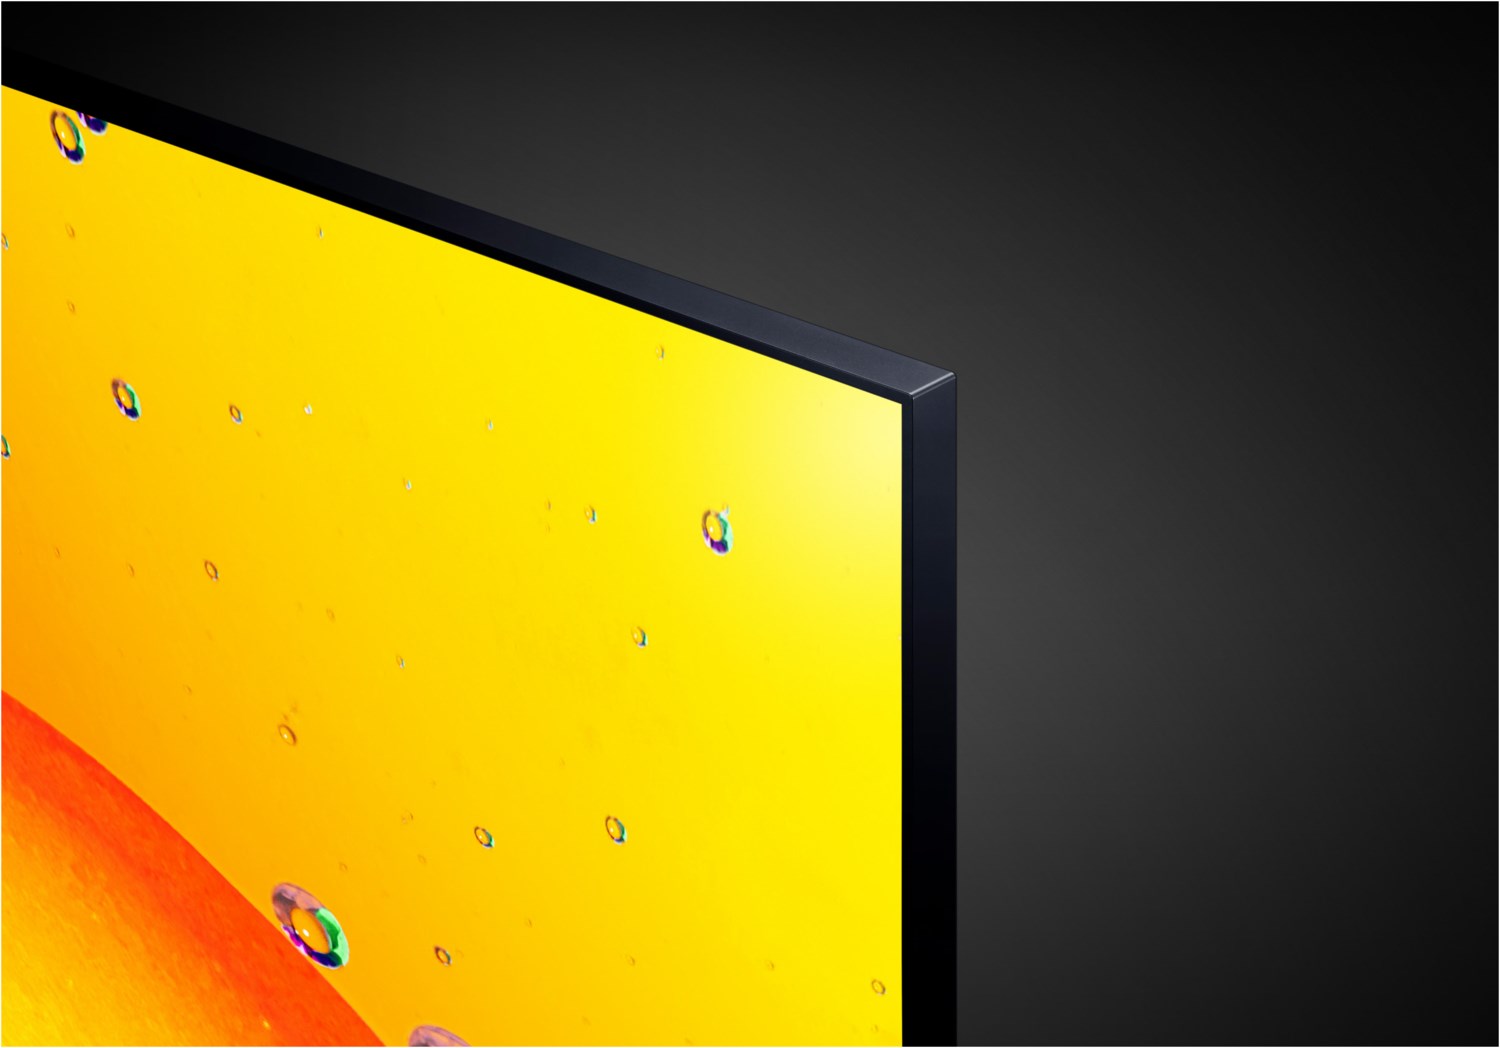 LG 50 Zoll (126 cm) 4K UHD NanoCell Smart TV schwarz